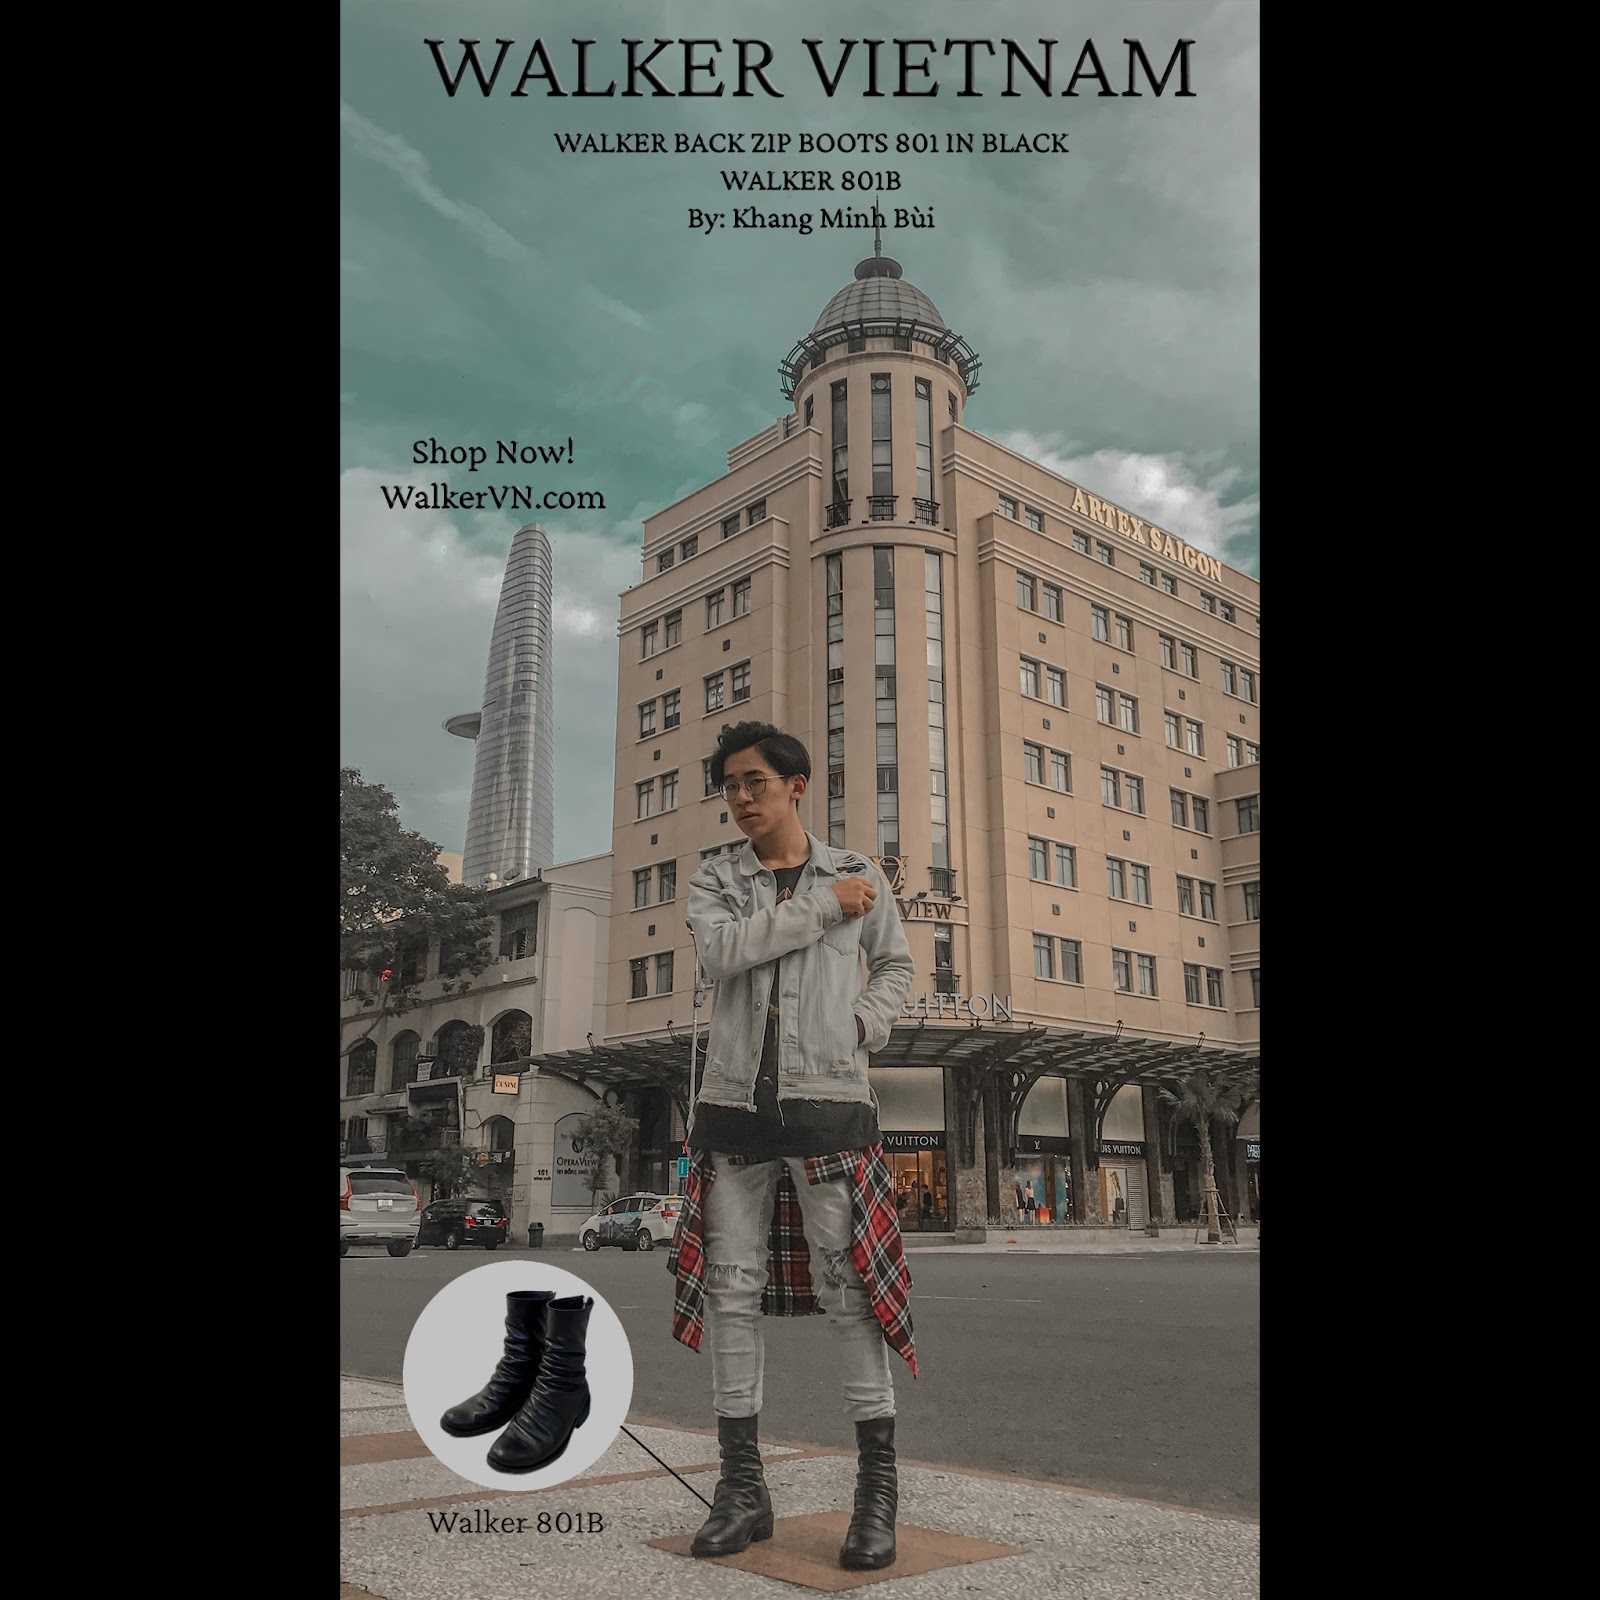 WALKER BACK ZIP BOOTS 801 IN BLACK - WALKER BACK ZIP BOOTS 801 IN BLACK - Walker Vietnam Pic0